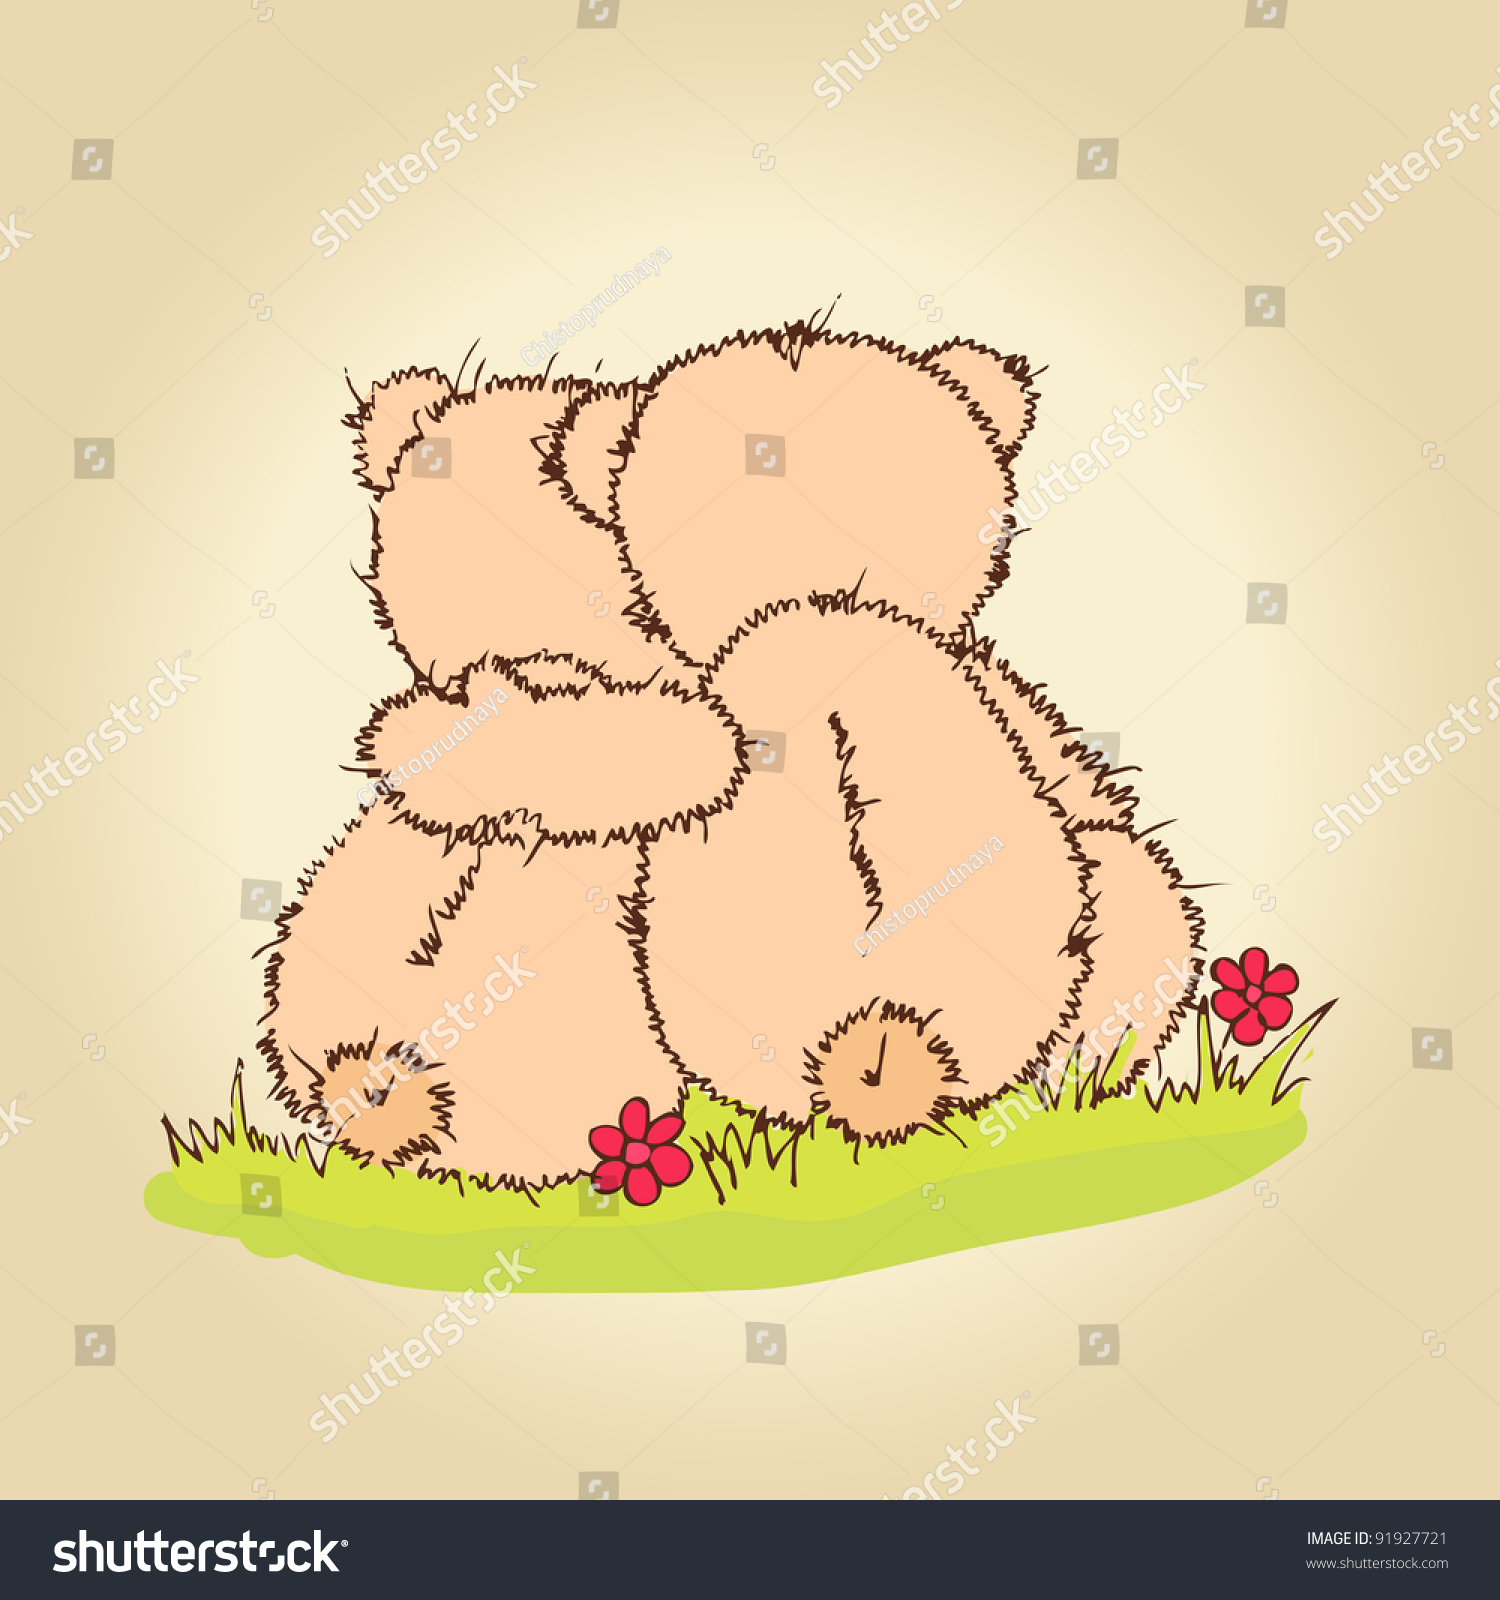 Hand Drawn Illustration Of Loving Couple Teddy Bears. 91927721